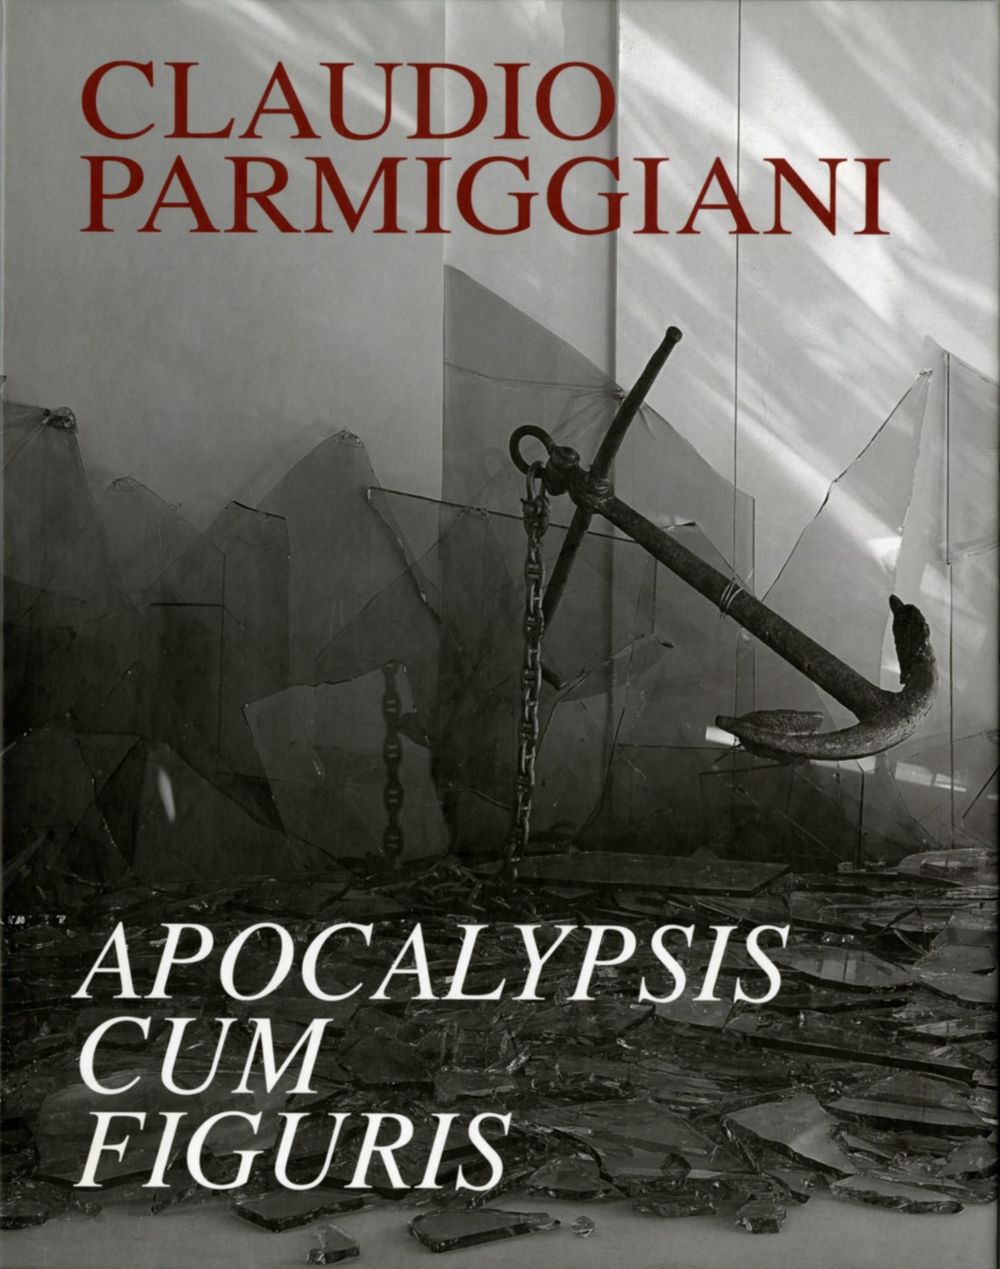 Book cover on plain gray background with title of Claudio Parmiggiani: Apocalypsis cum Figuris